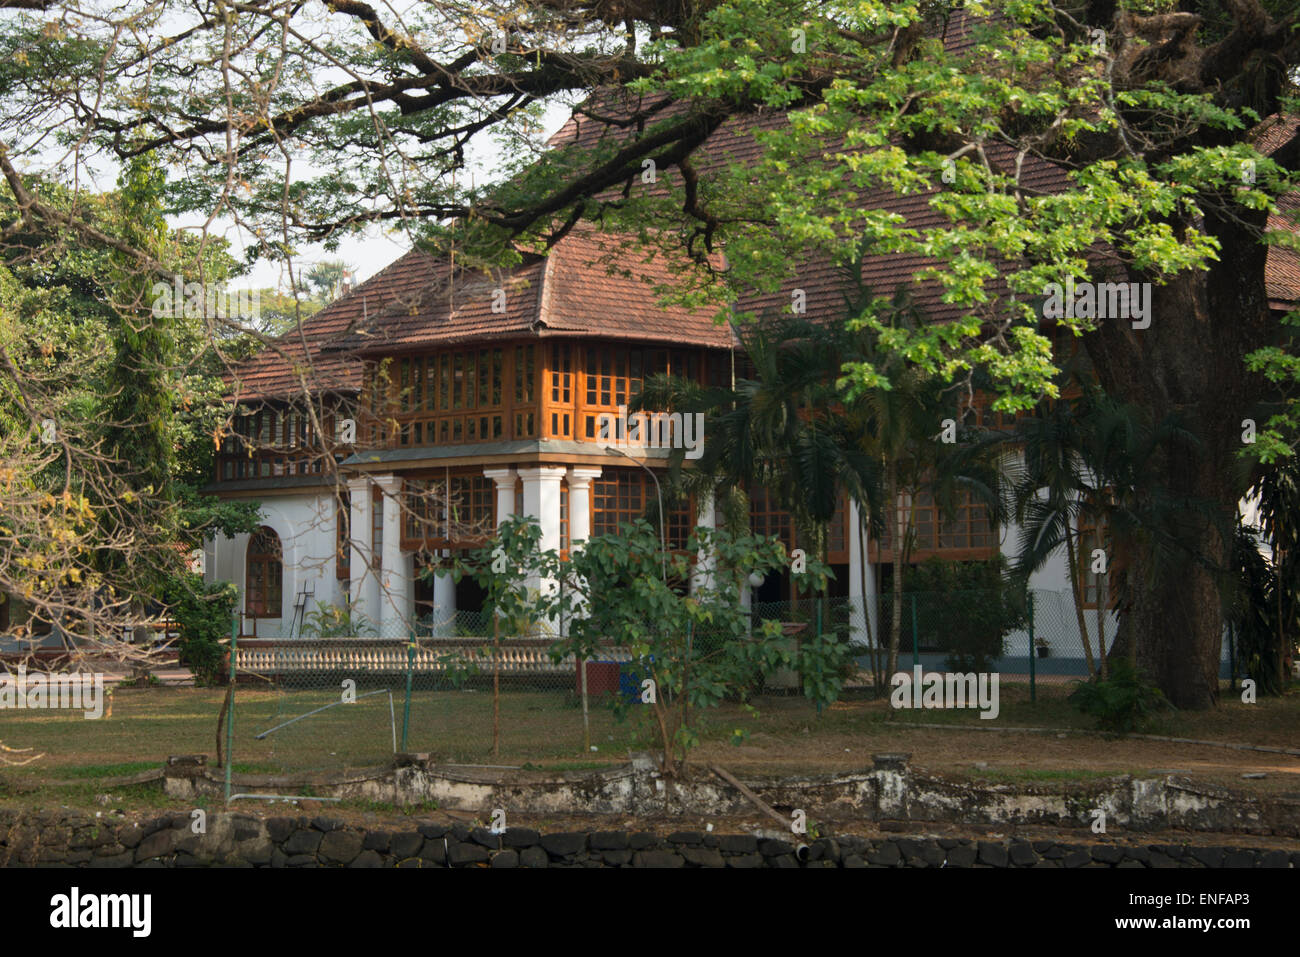 Bolgatty Palace, a luxury hotel resort on Bolgatty Island, faces Vembanad Lake in Cochin (Kochi), Kerala, India.   The  former Stock Photo